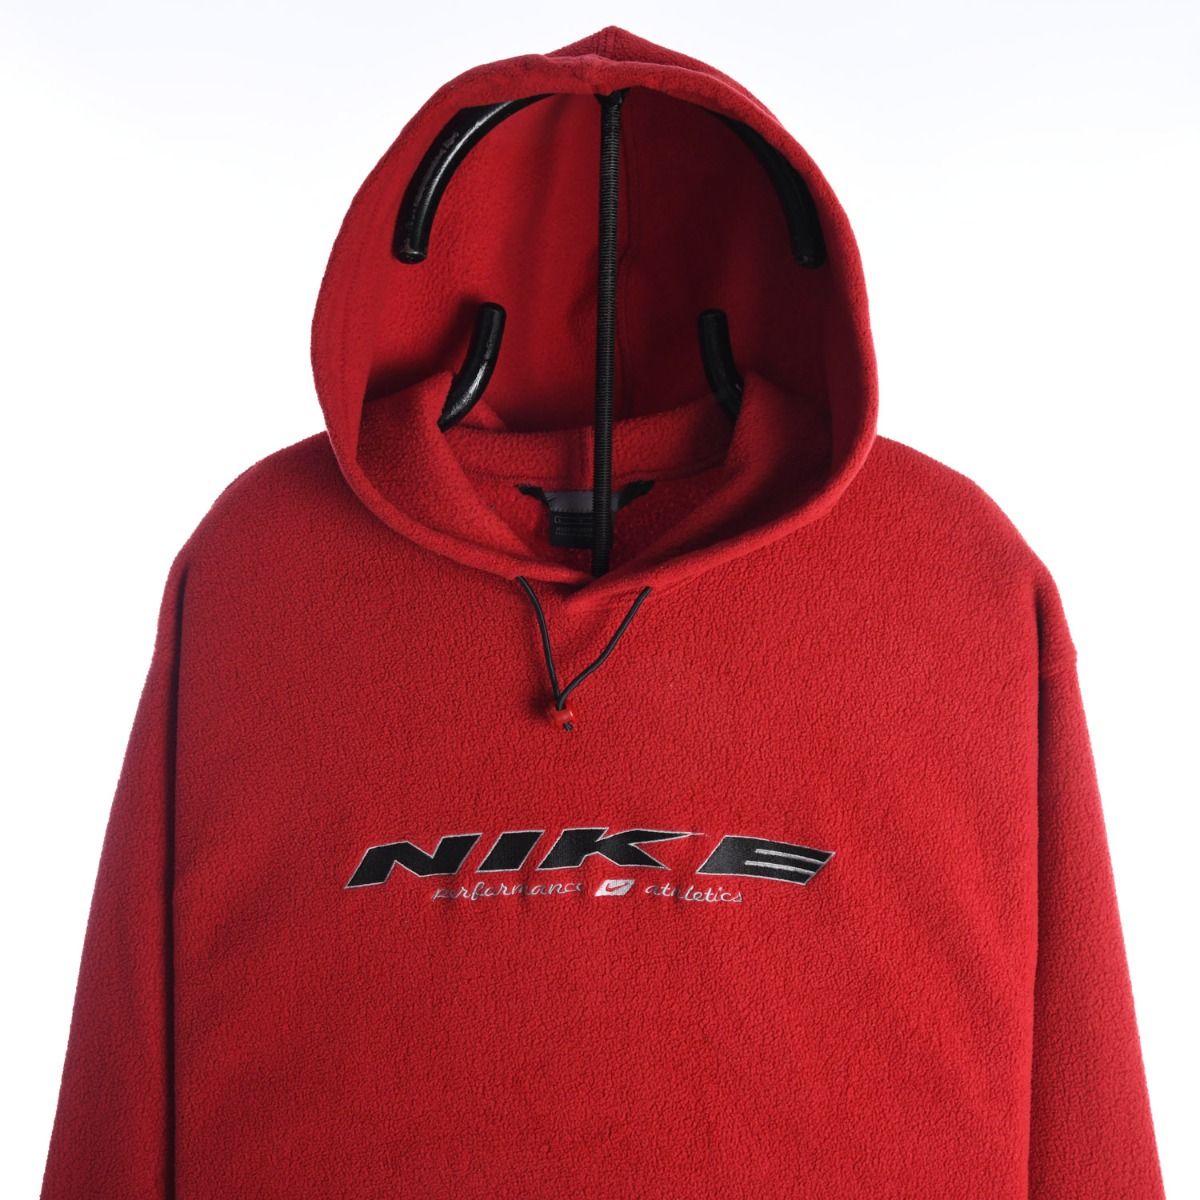 Nike Early 2000s Fleece Red Hoodie